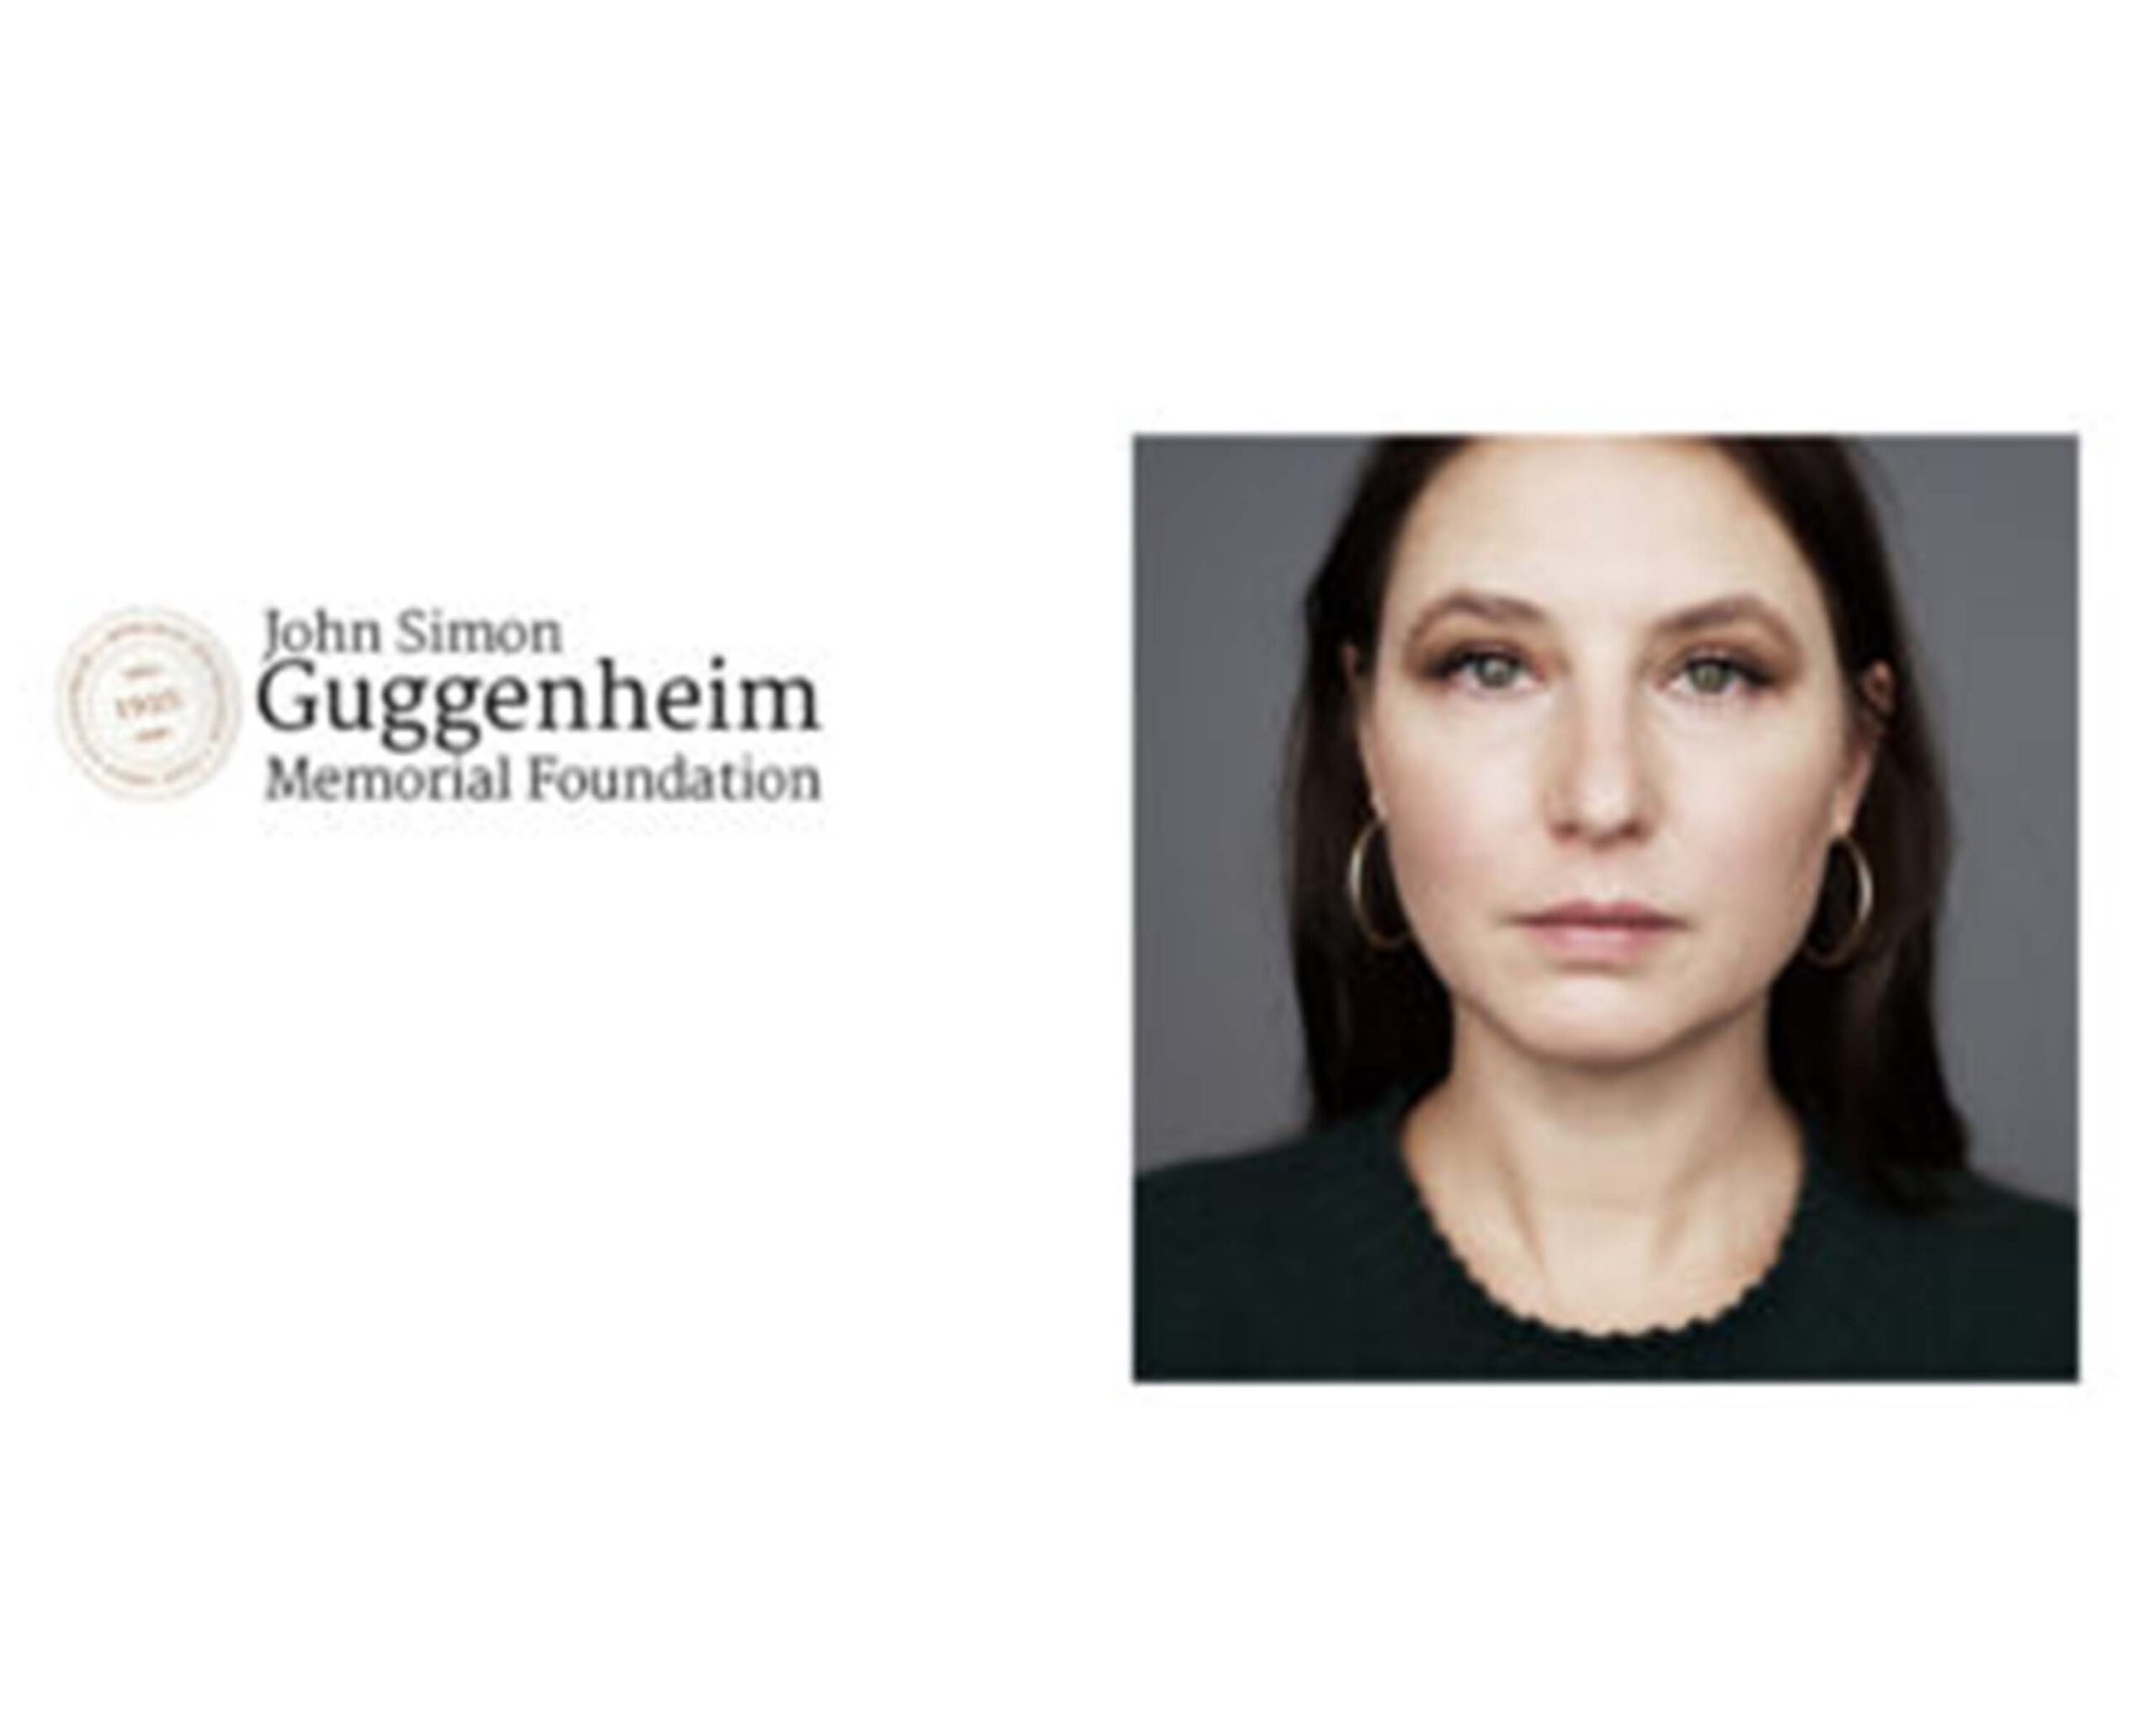 Guggenheim Memorial Foundation, 2019 | Jessica Eaton Awarded Guggenheim Fellowship in Photography